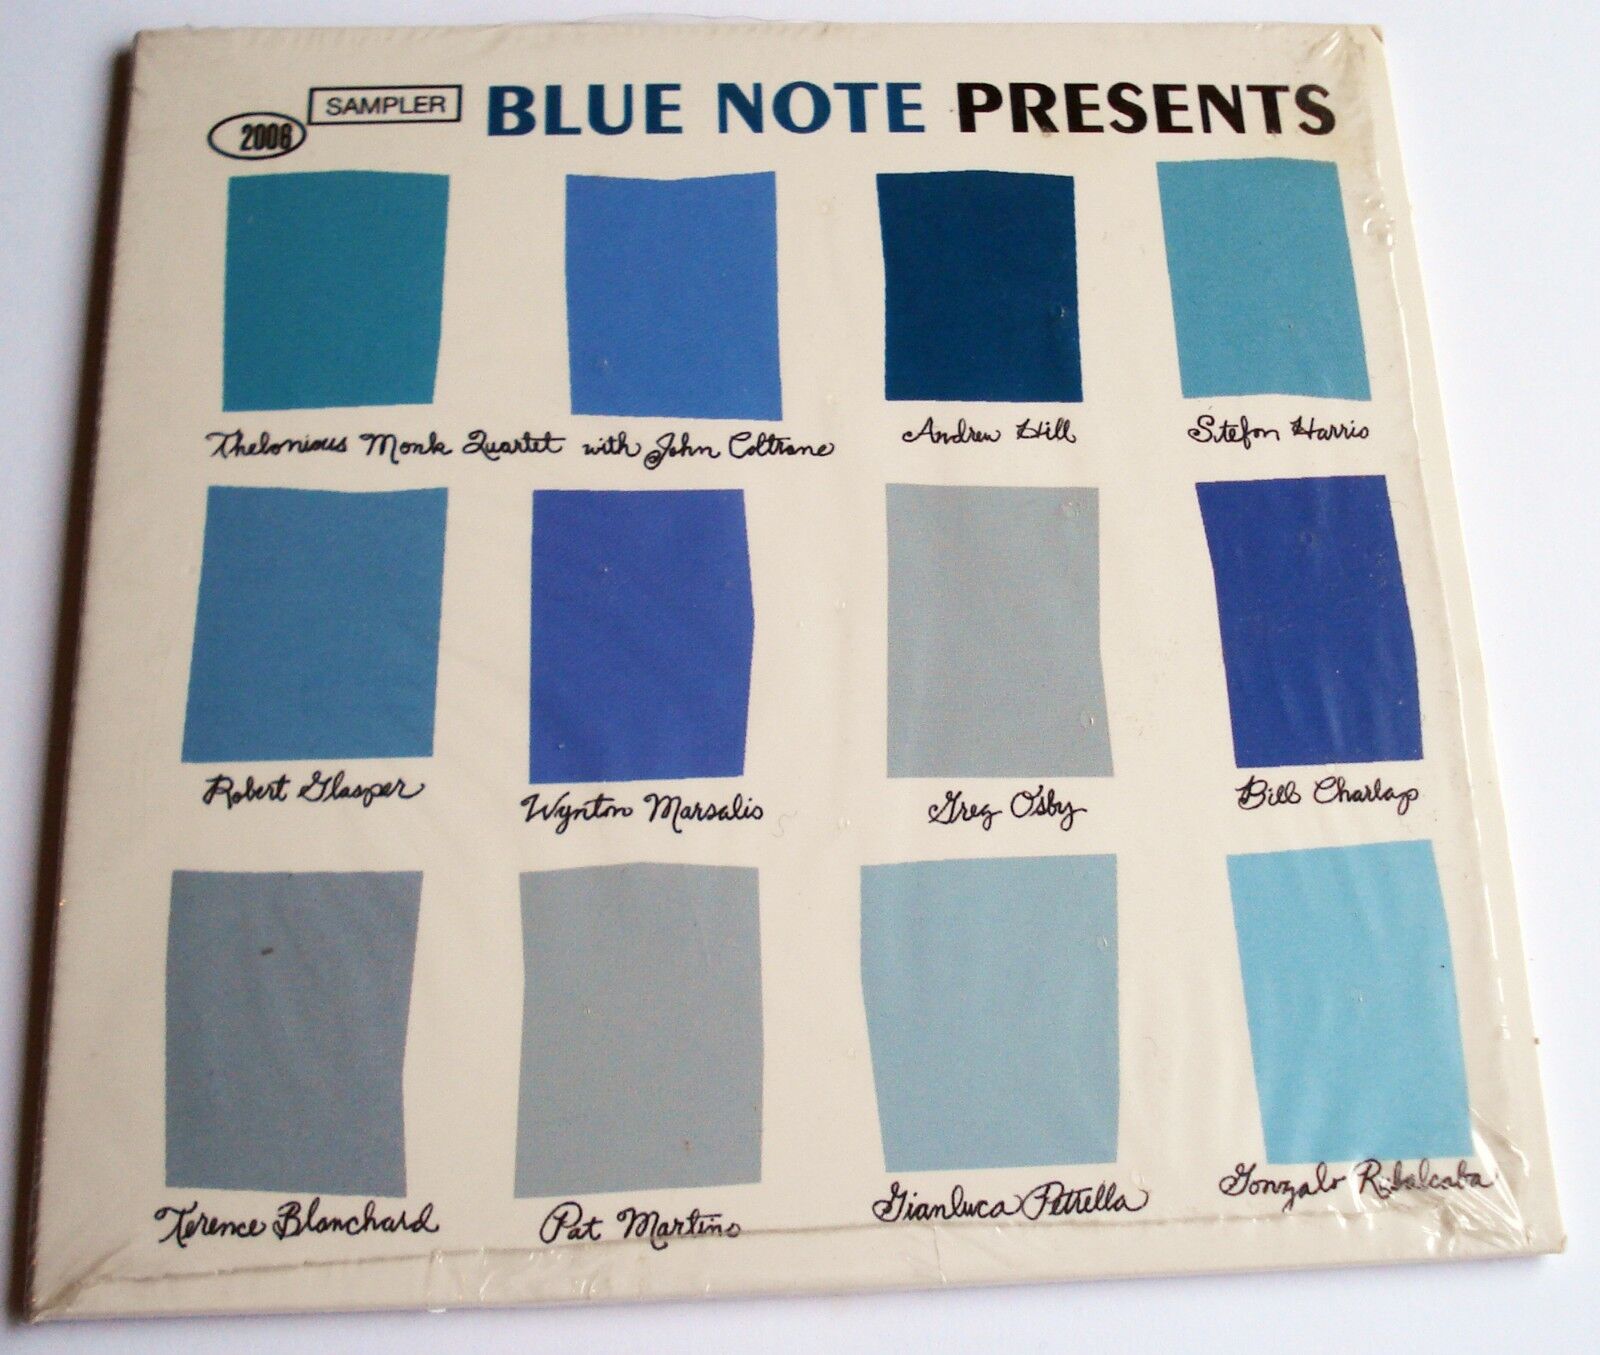 BLUE NOTE PRESENTS - 2008 SAMPLER - BLUE NOTE / EMI 42950 - CD - LIKE NEW